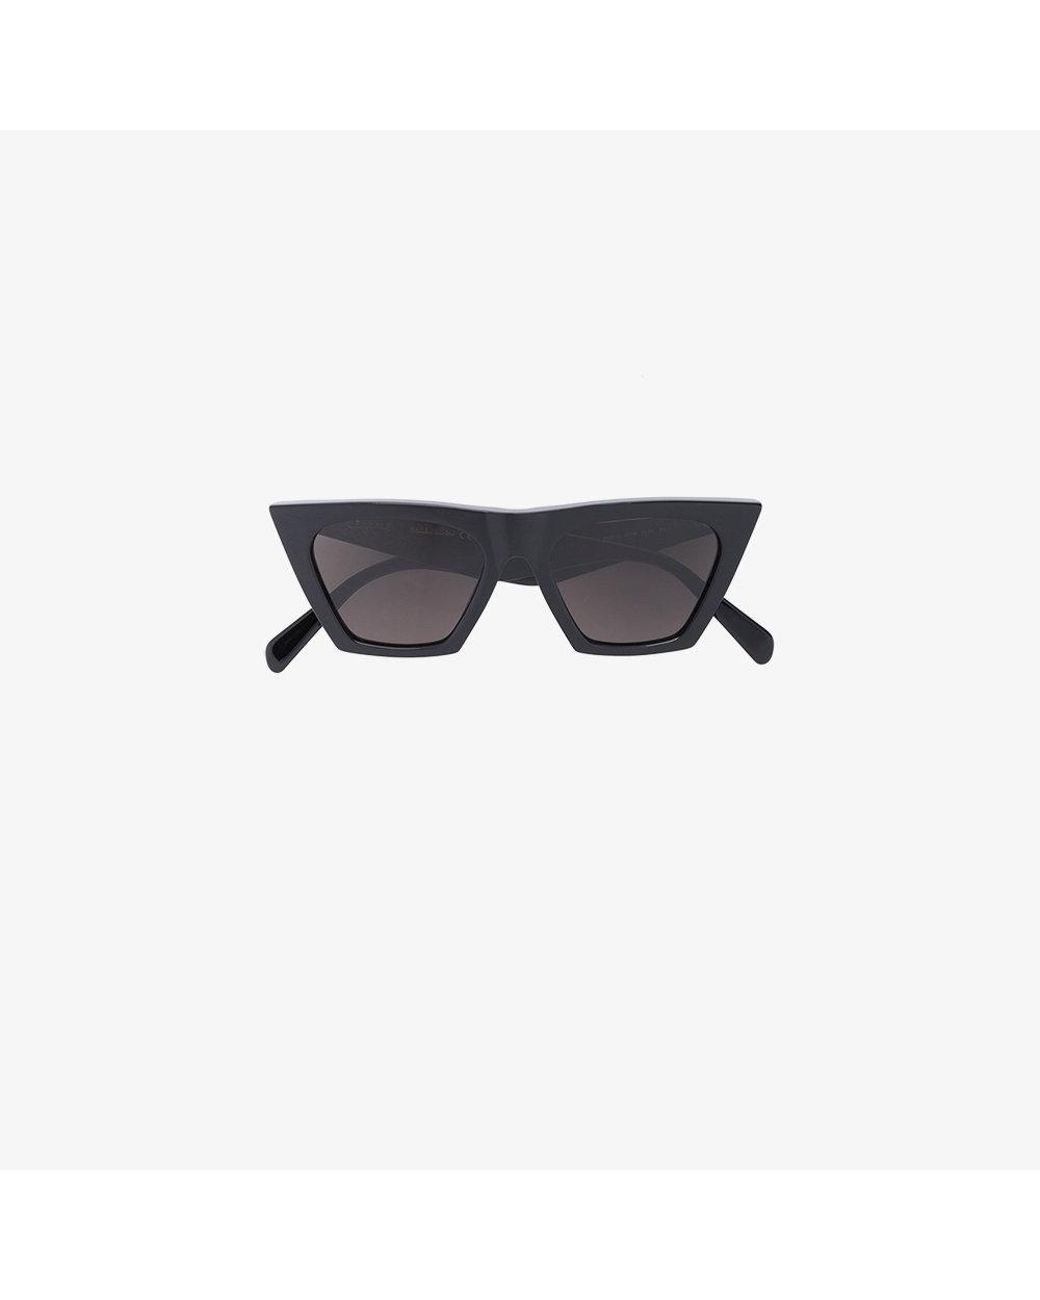 Celine Edge Sunglasses in Black | Lyst